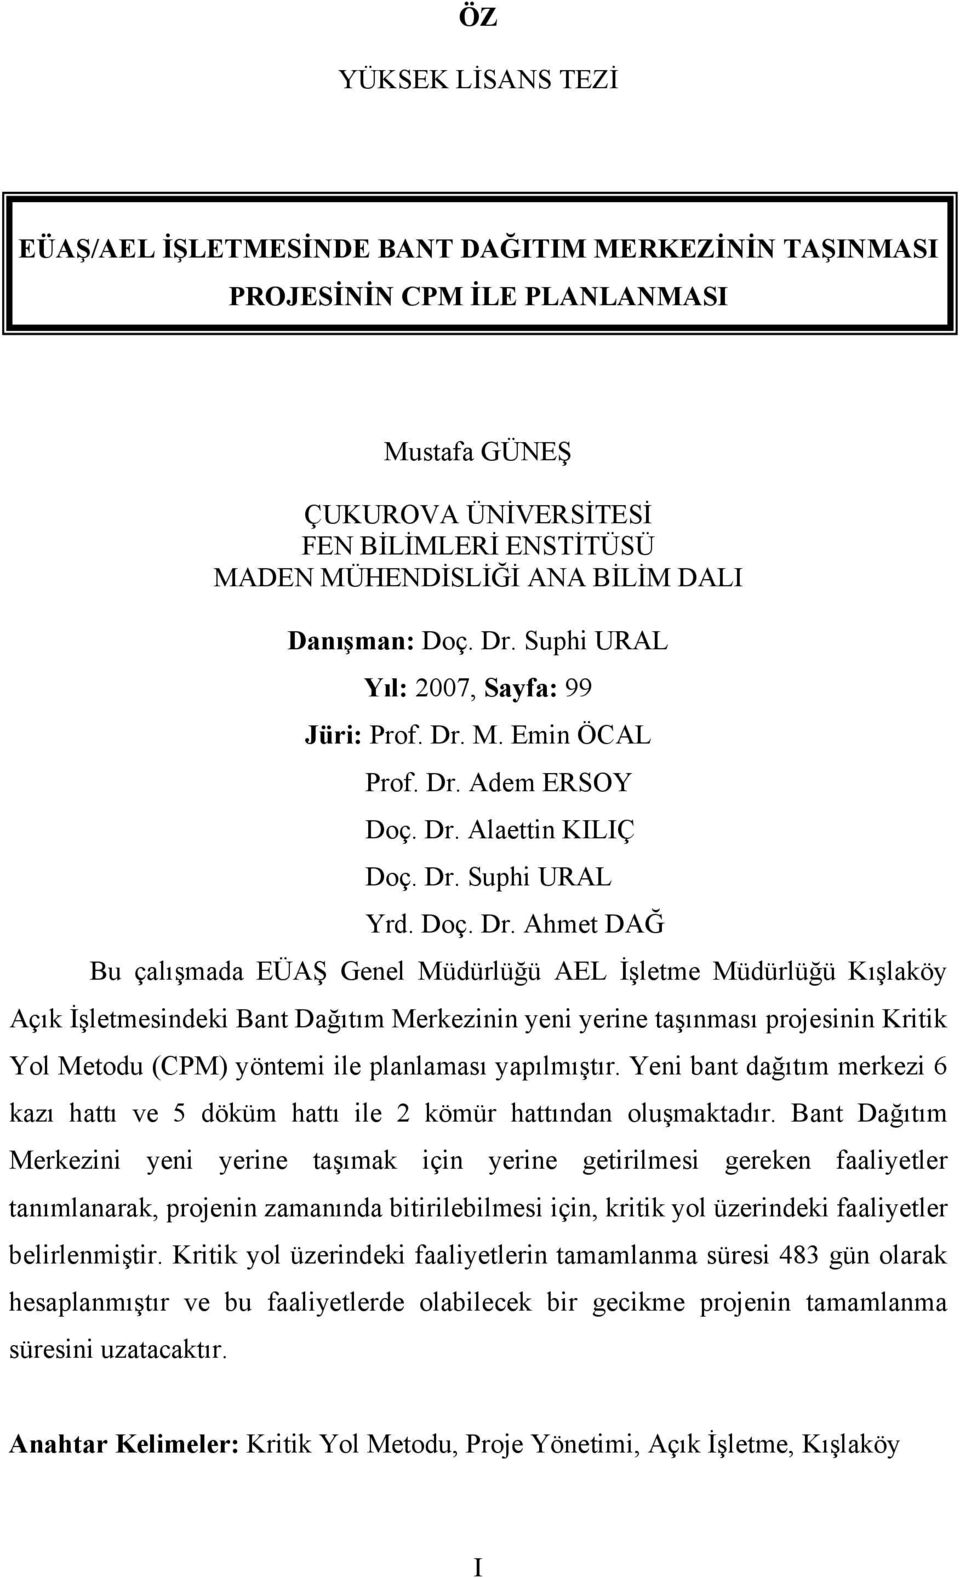 Suphi URAL Yıl: 2007, Sayfa: 99 Jüri: Prof. Dr. M. Emin ÖCAL Prof. Dr. Adem ERSOY  Alaettin KILIÇ  Suphi URAL Yrd.